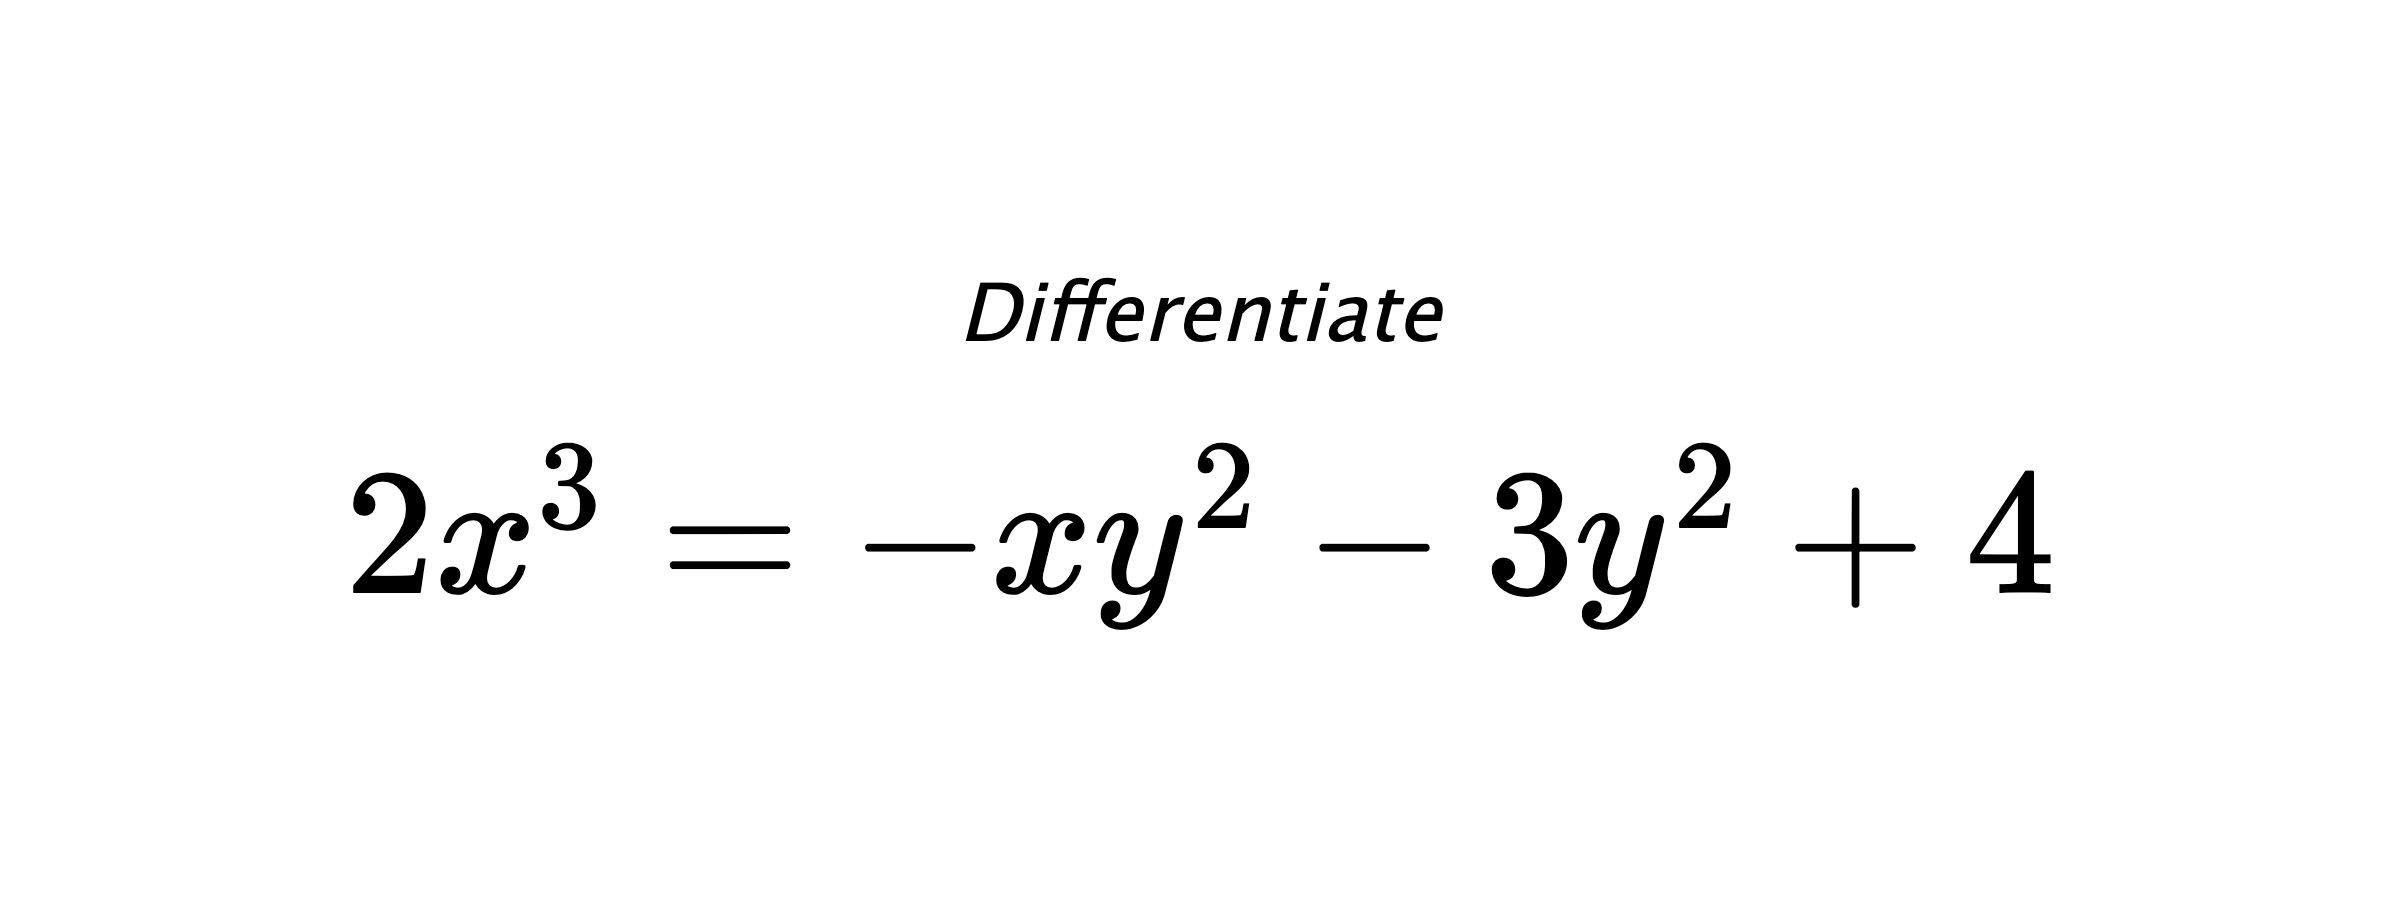 Differentiate $ 2x^3 = -xy^2-3y^2+4 $